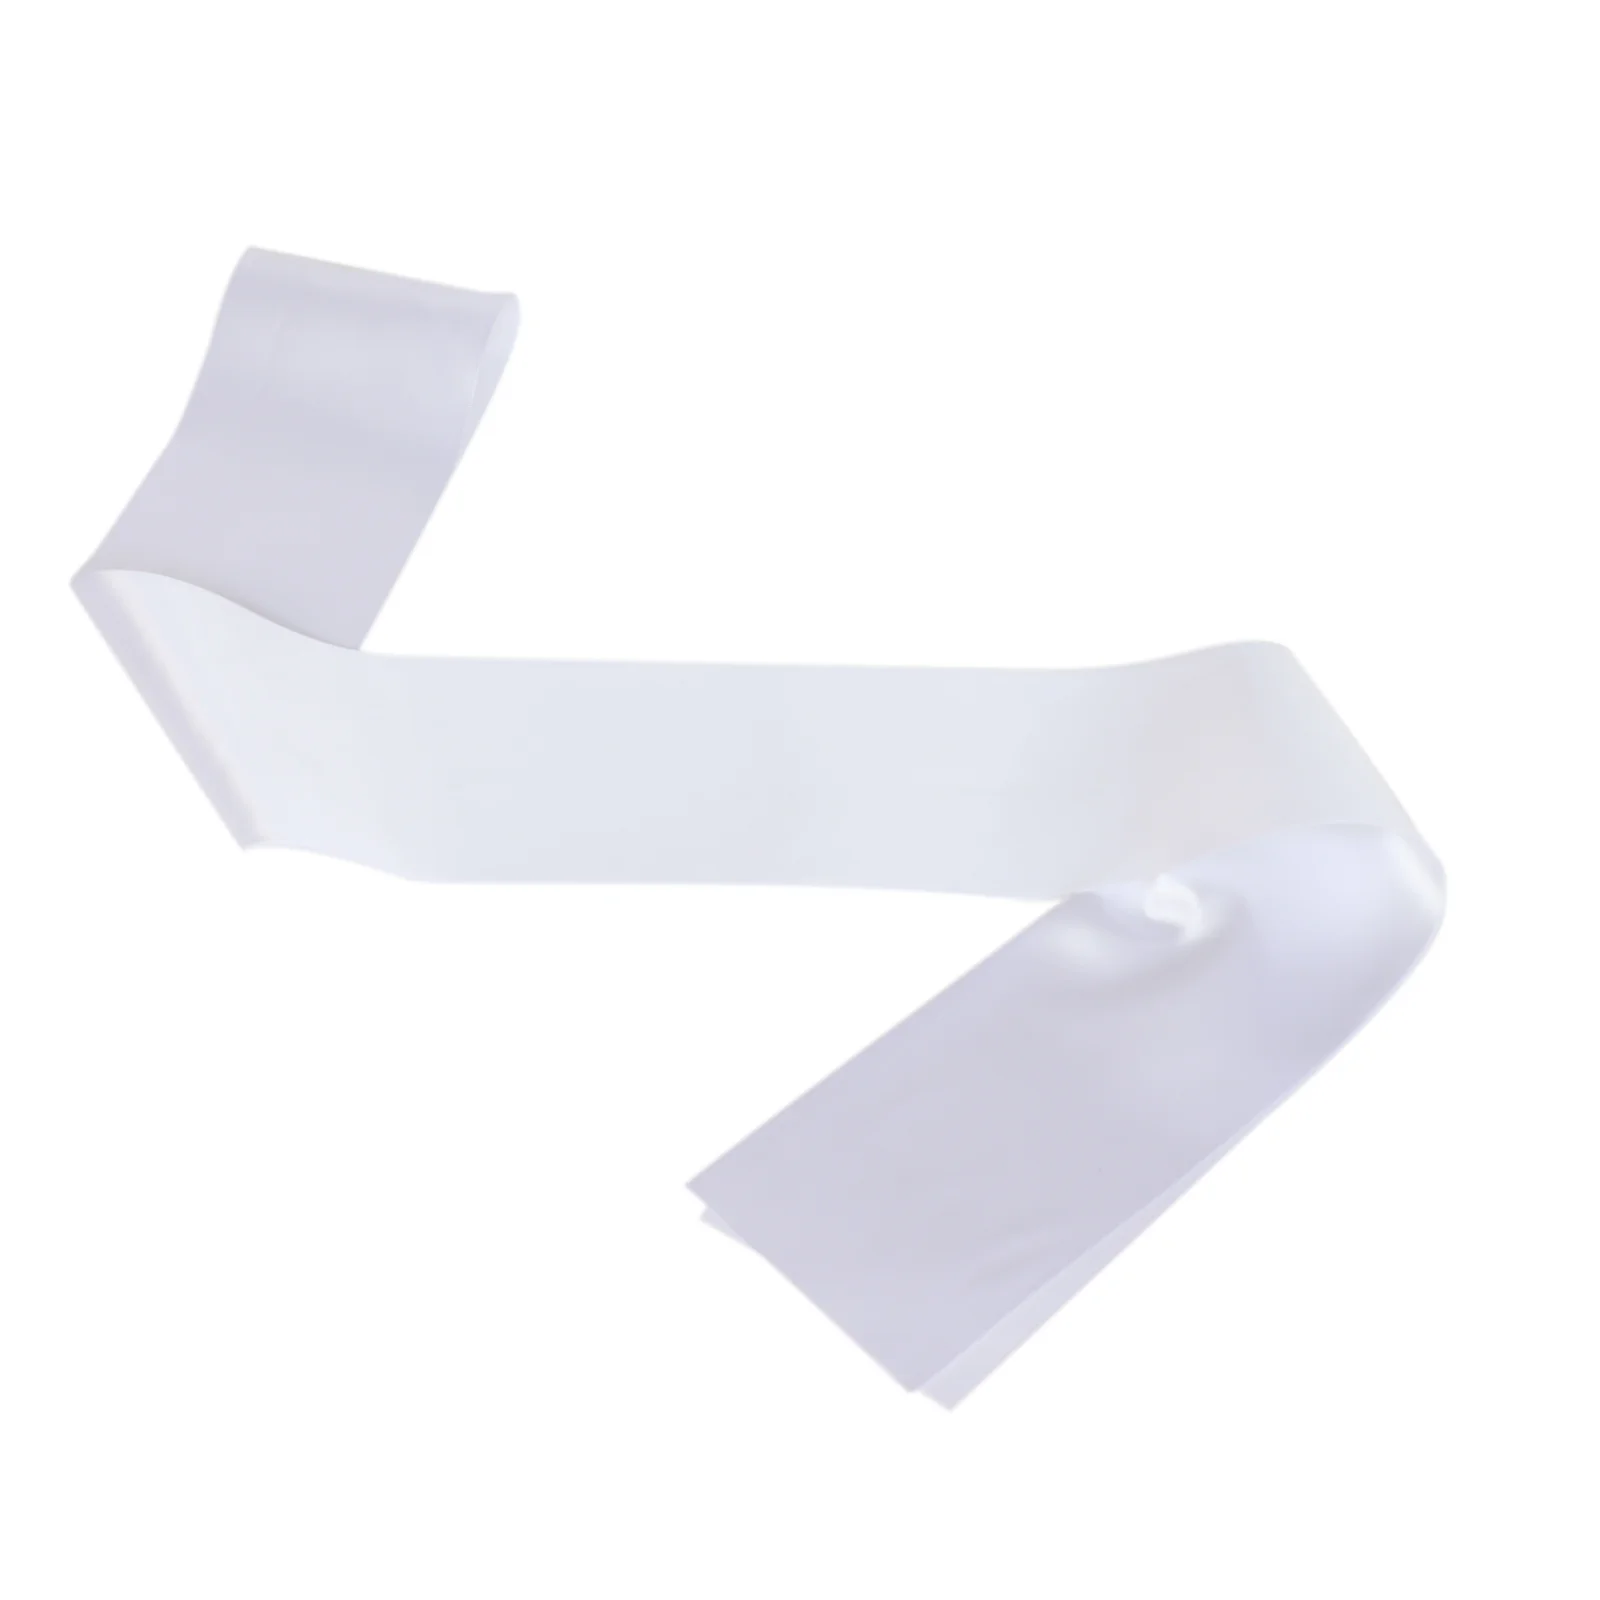 Linji custom printable solid blank satin birthday wedding party sash